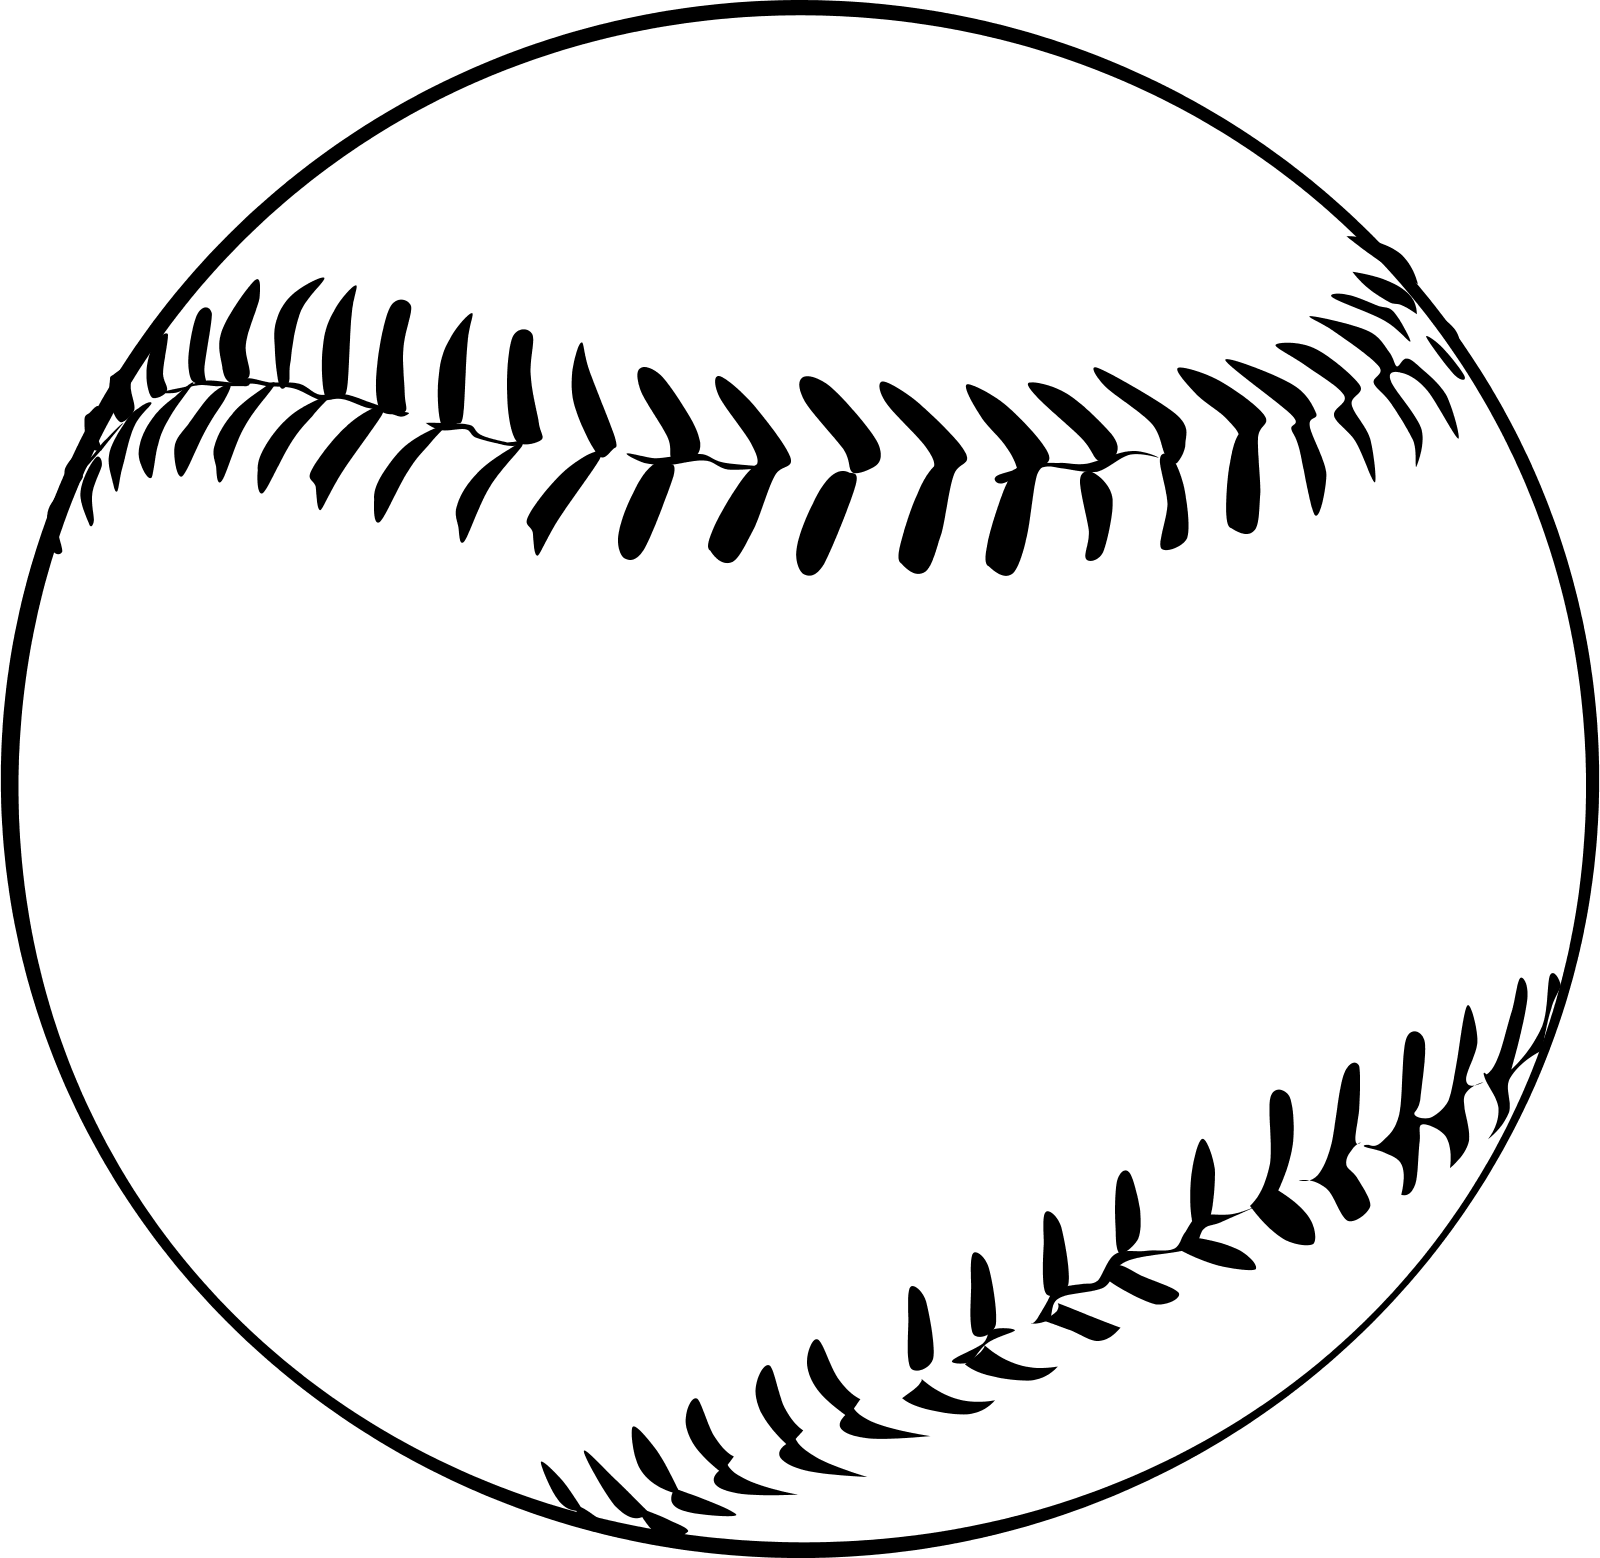 Black and White Baseball Logo - Baseball logos image royalty free stock - RR collections